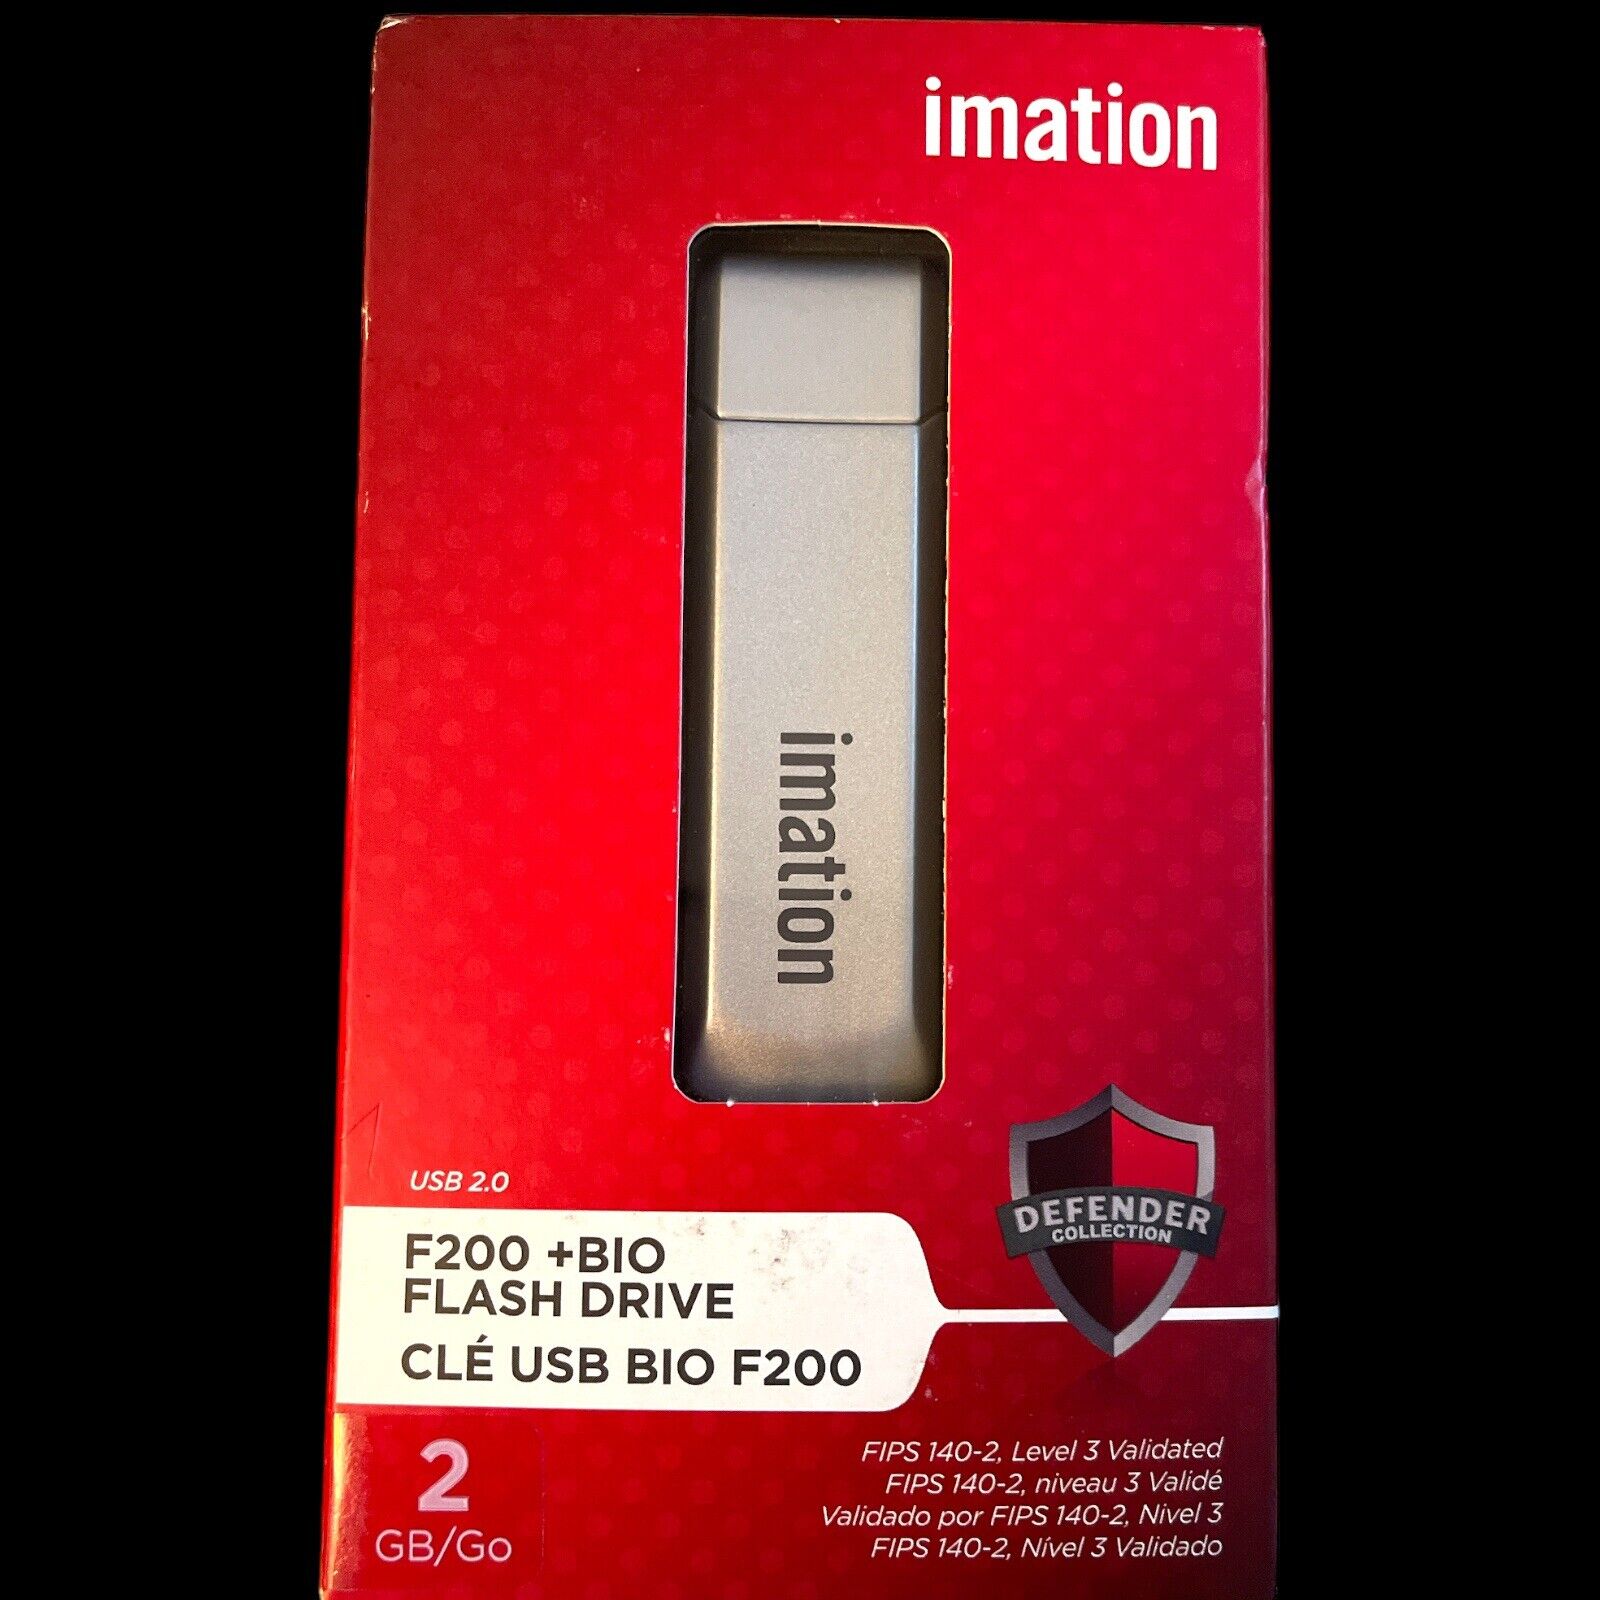 Imation Defender F200 + Bio USB Flash Drive 2G Fips 140-2 Level 3 Validated 256